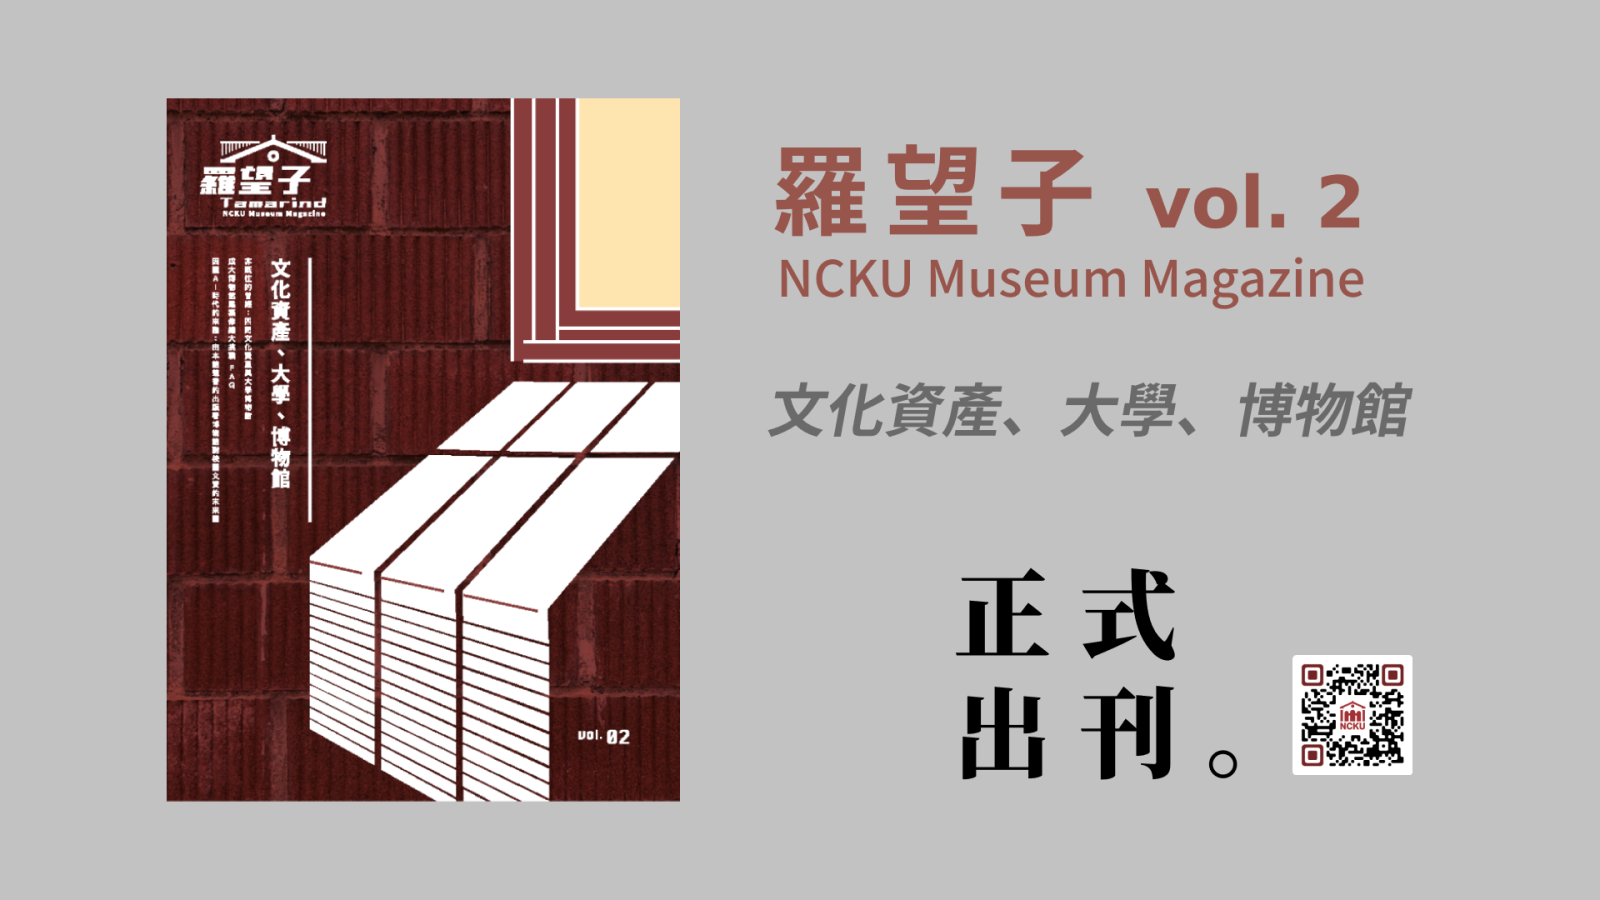 NCKU Museum Magazine vol.2 